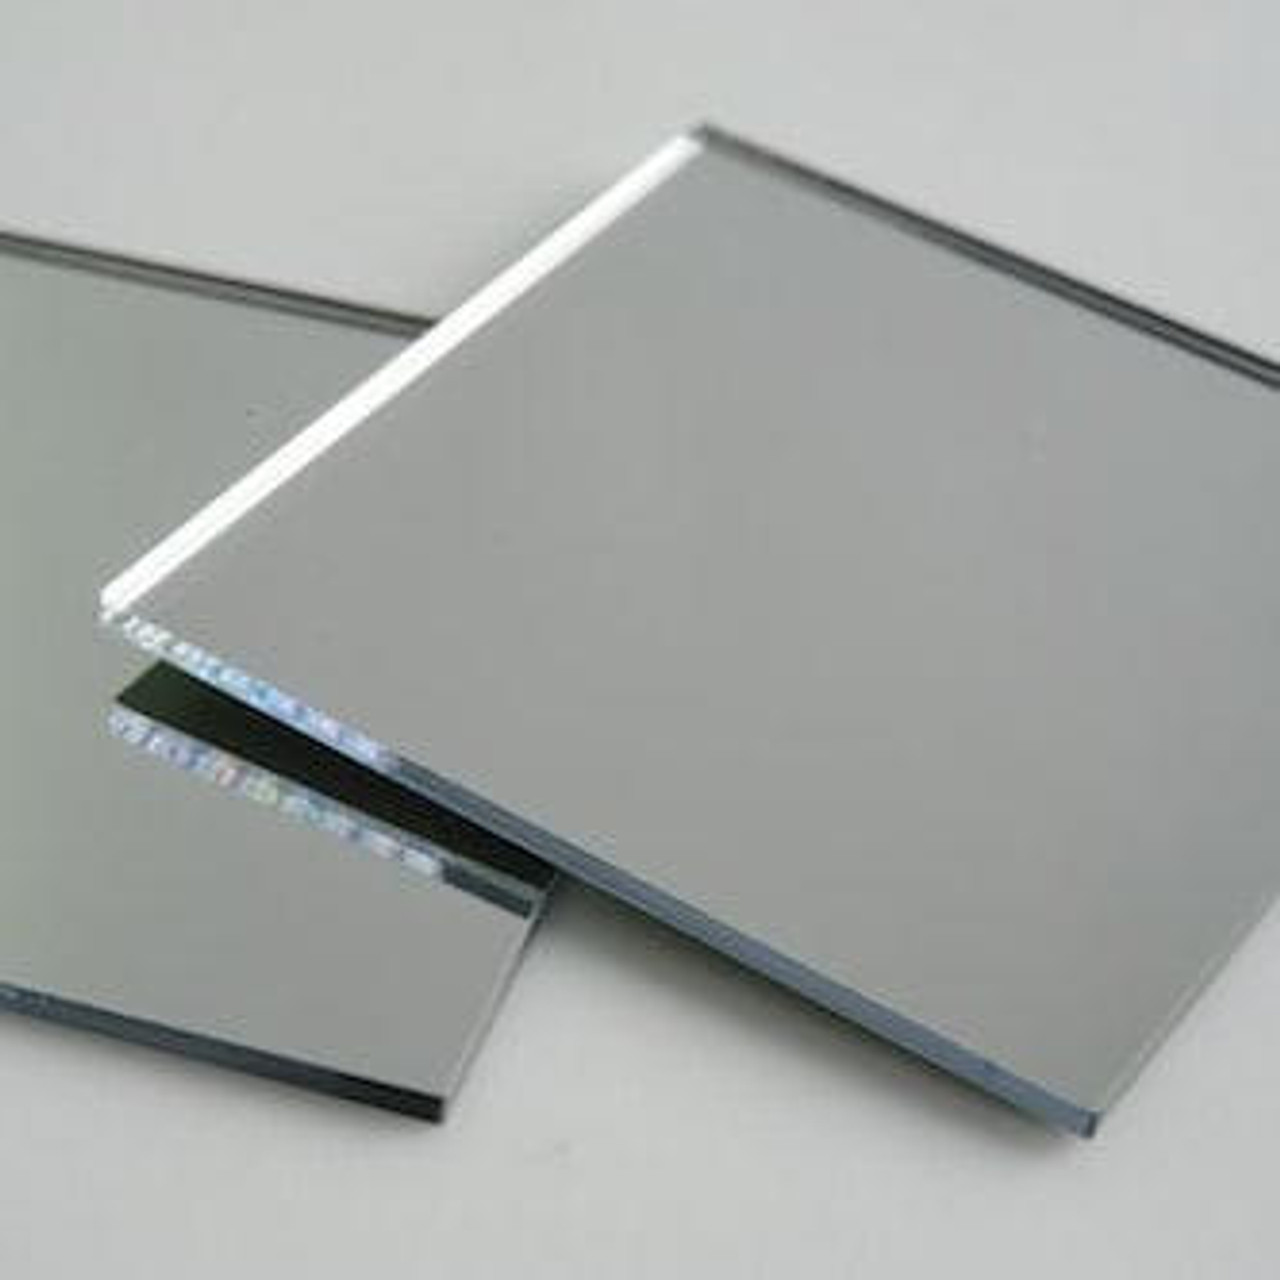 1/8 Round Acrylic Mirror Sheet Circle Mirror Thick Shatterproof Plexiglass